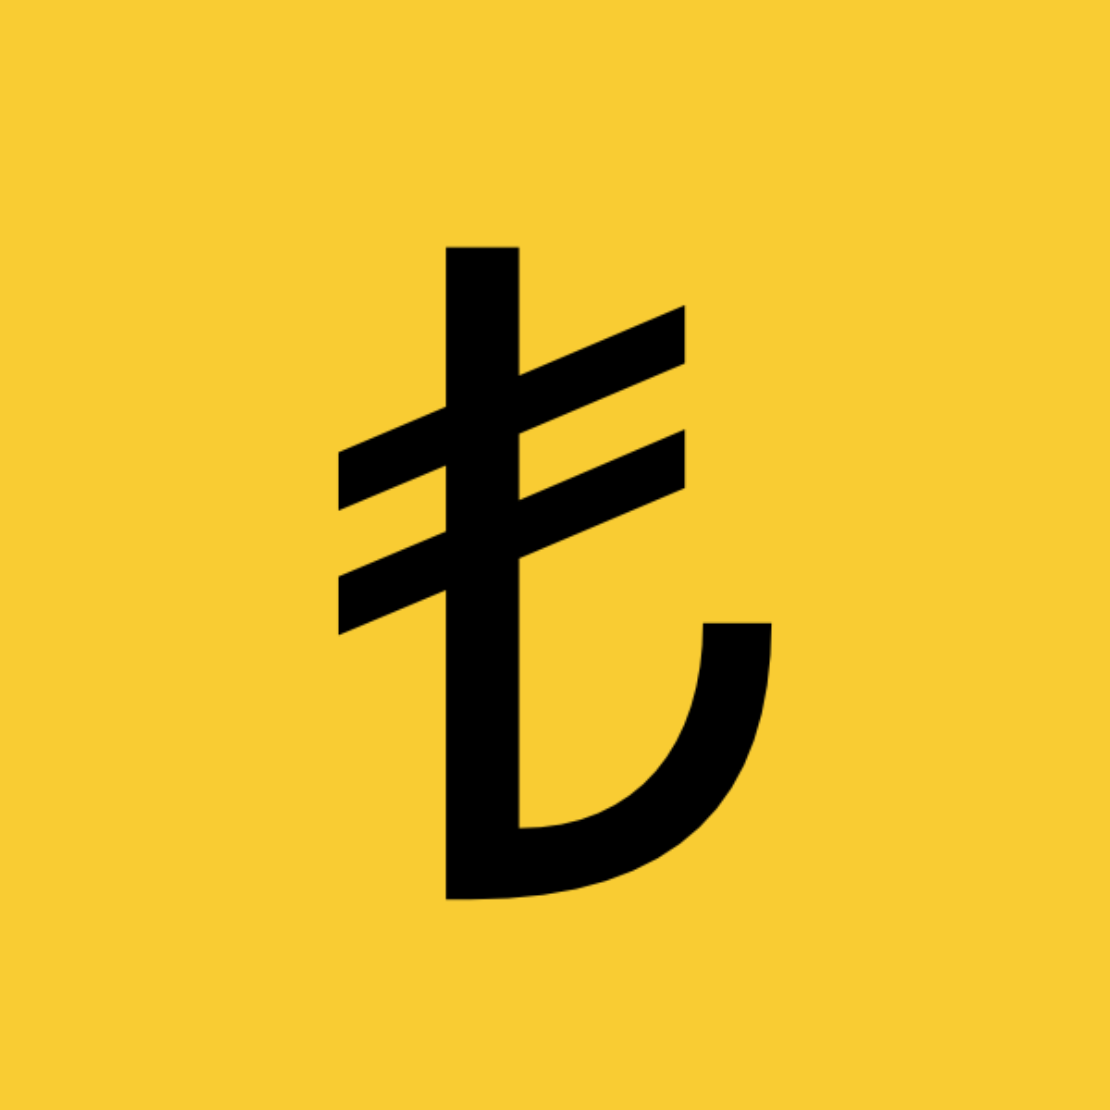 Turkish lira currency symbol